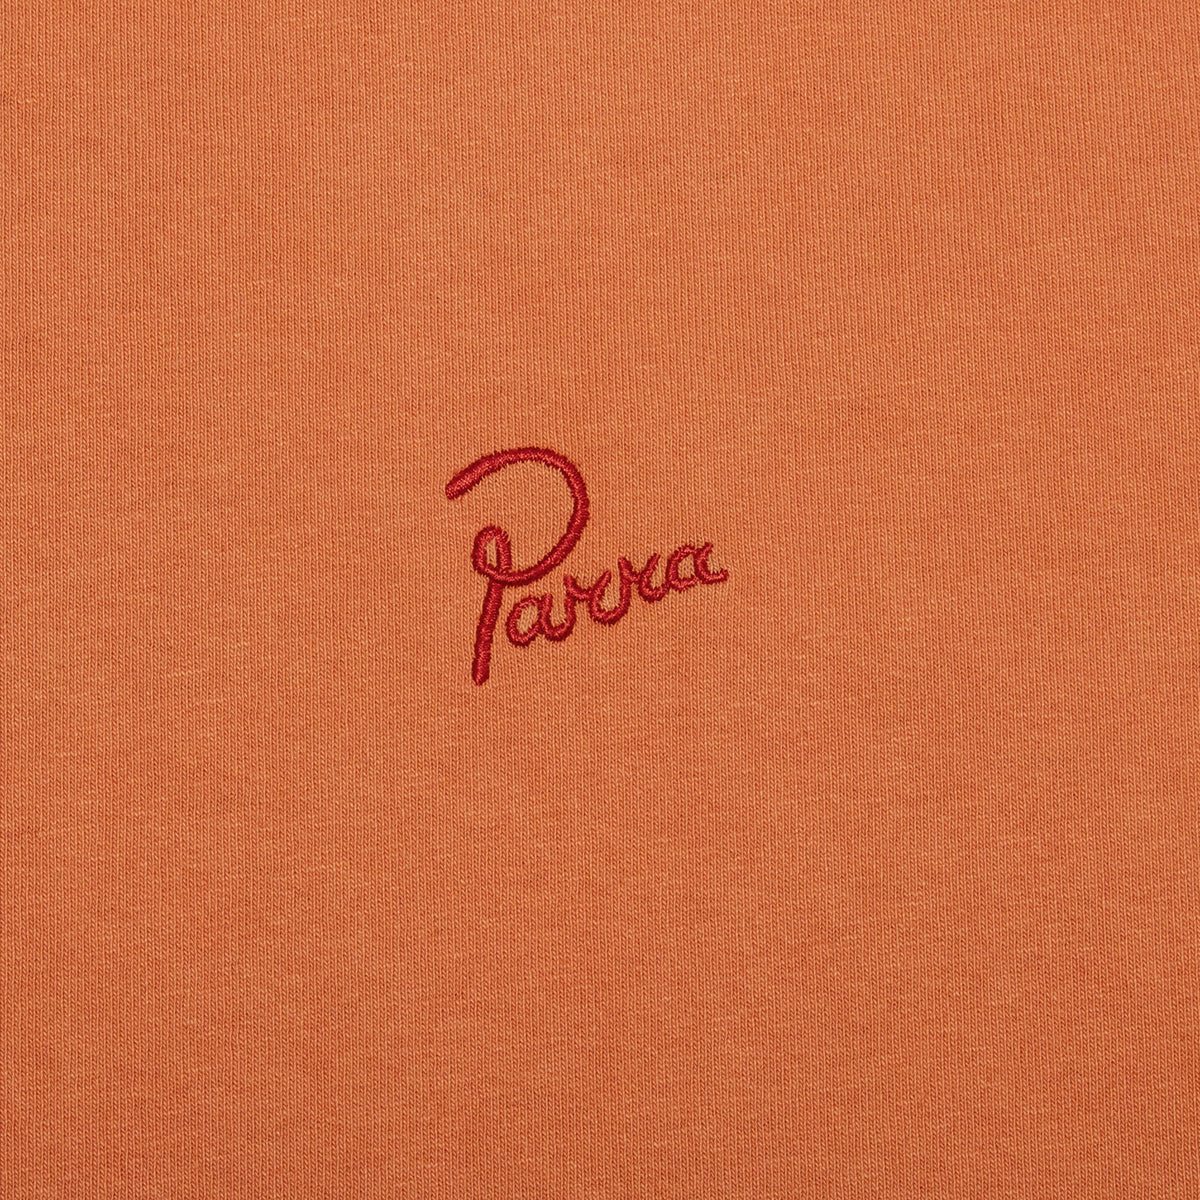 by Parra | Script Logo T-Shirt 51422 Washed Tangerine&nbsp;